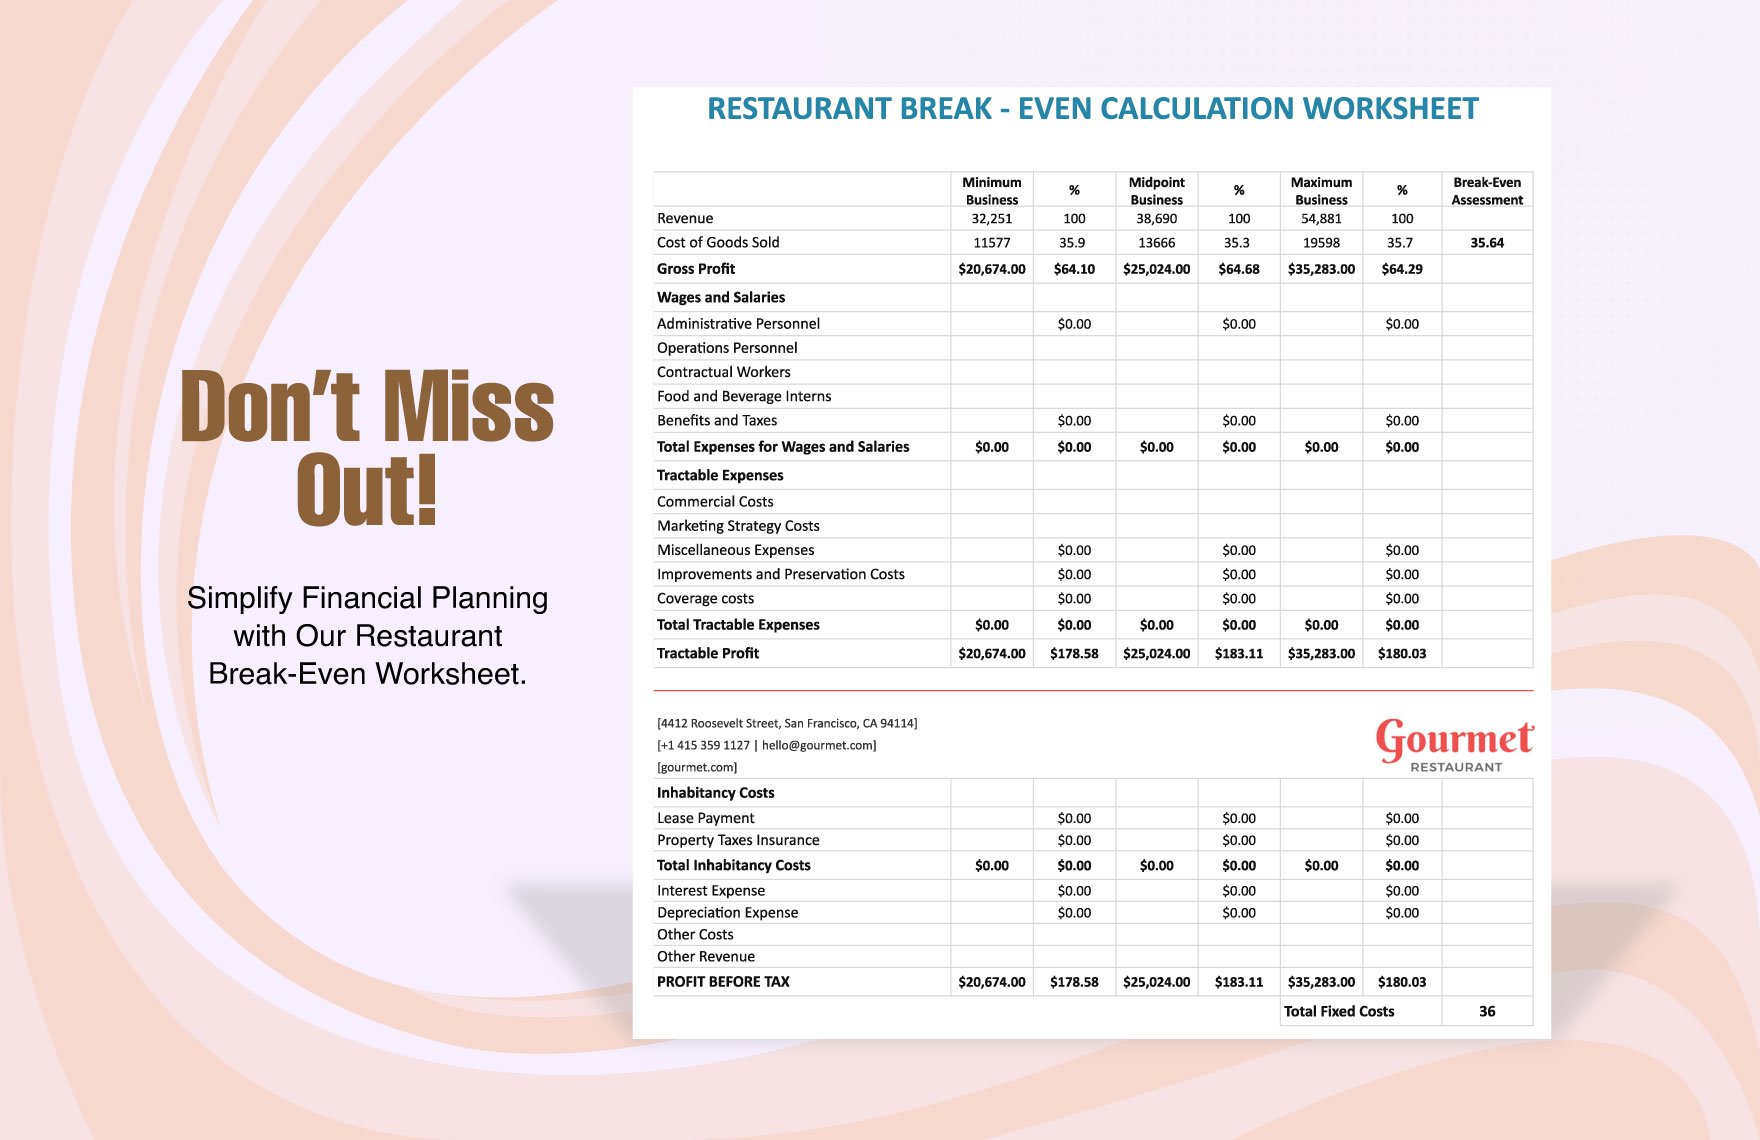 Restaurant Break-Even Calculation Worksheet Template